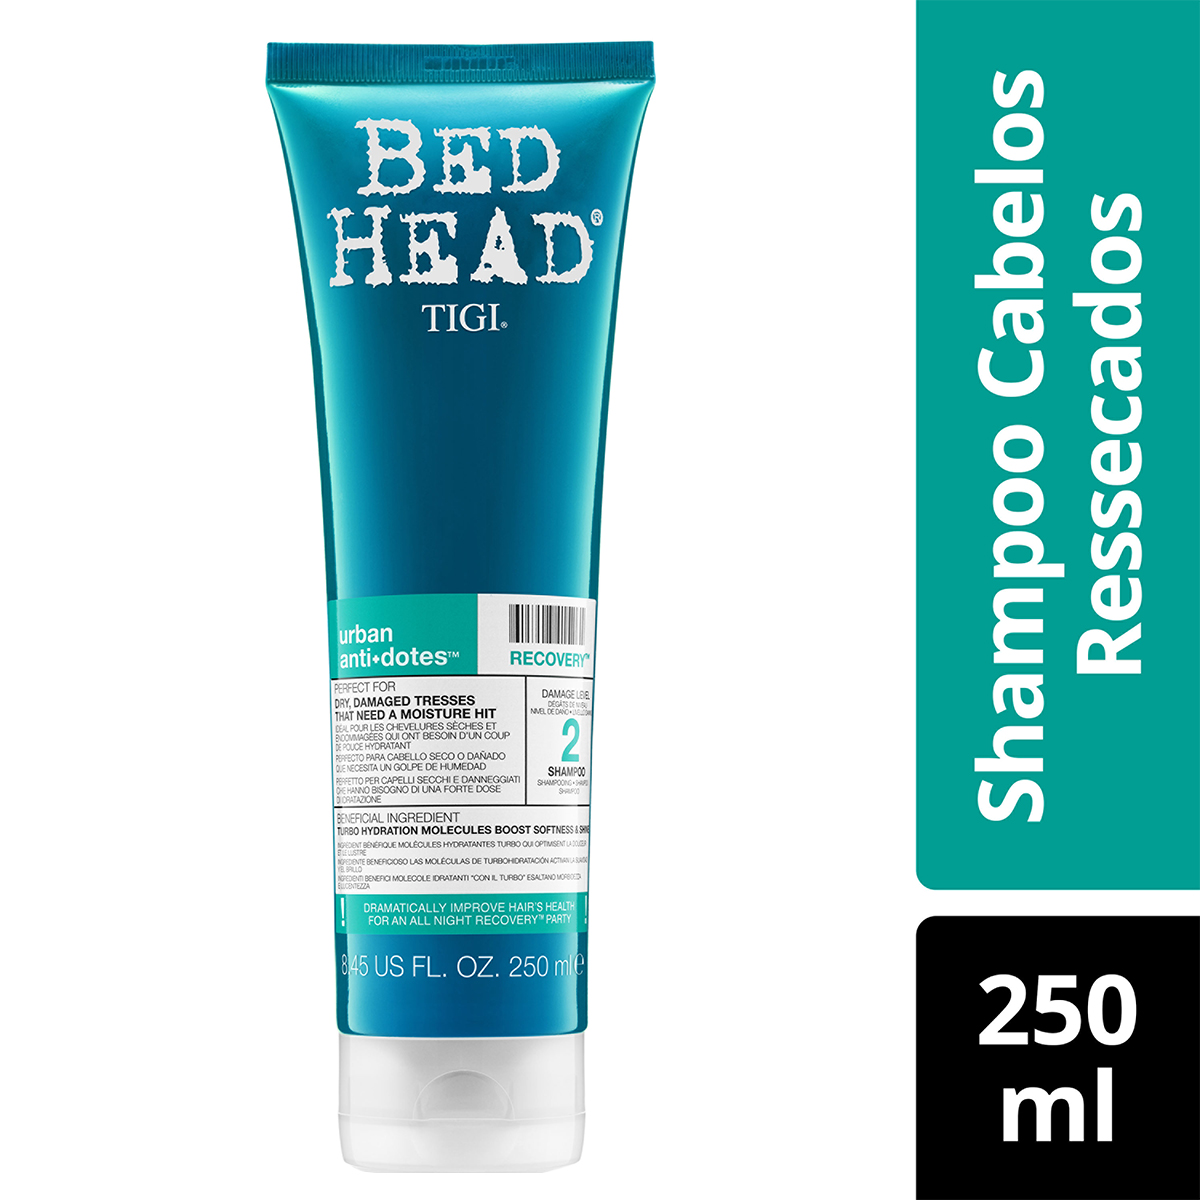 Shampoo Bed Head Urban Anti+dotes Recovery 250ml